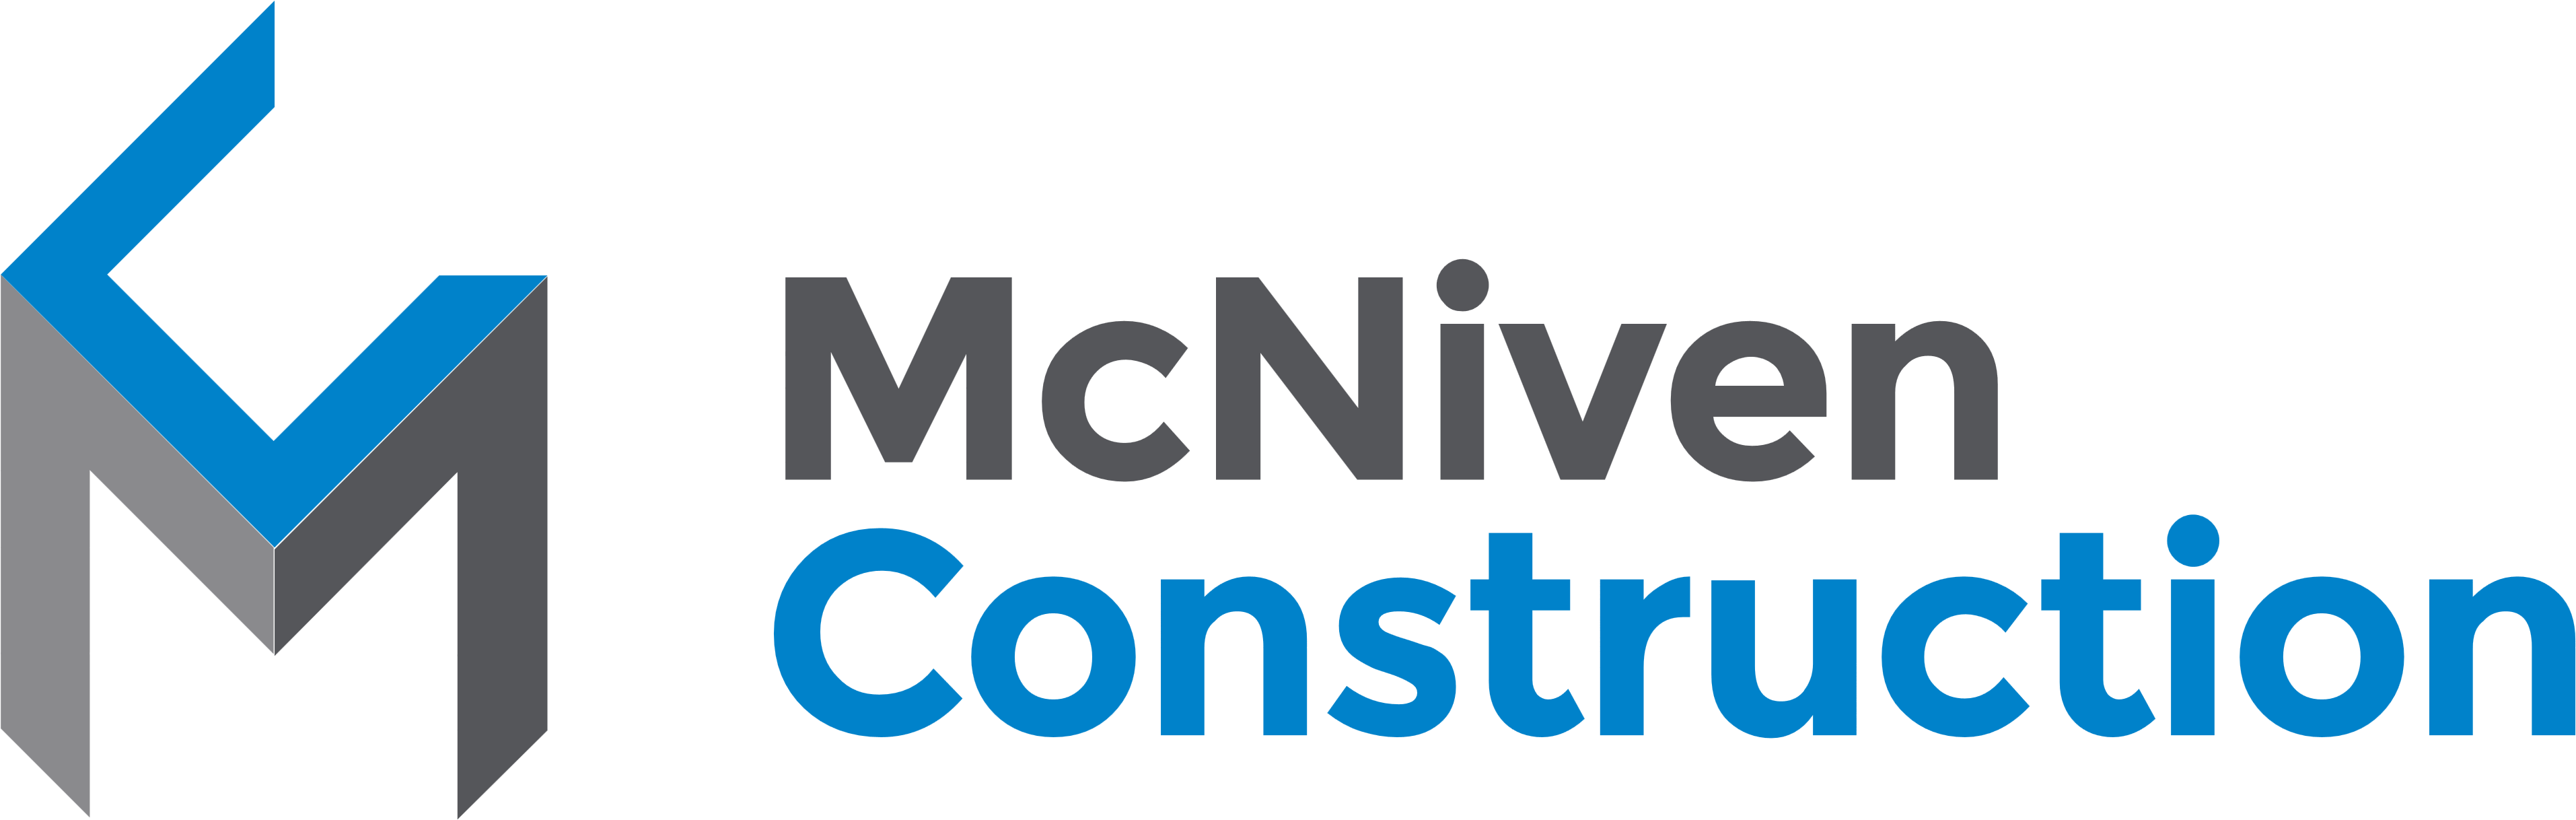 Mc Niven Construction Logo PNG